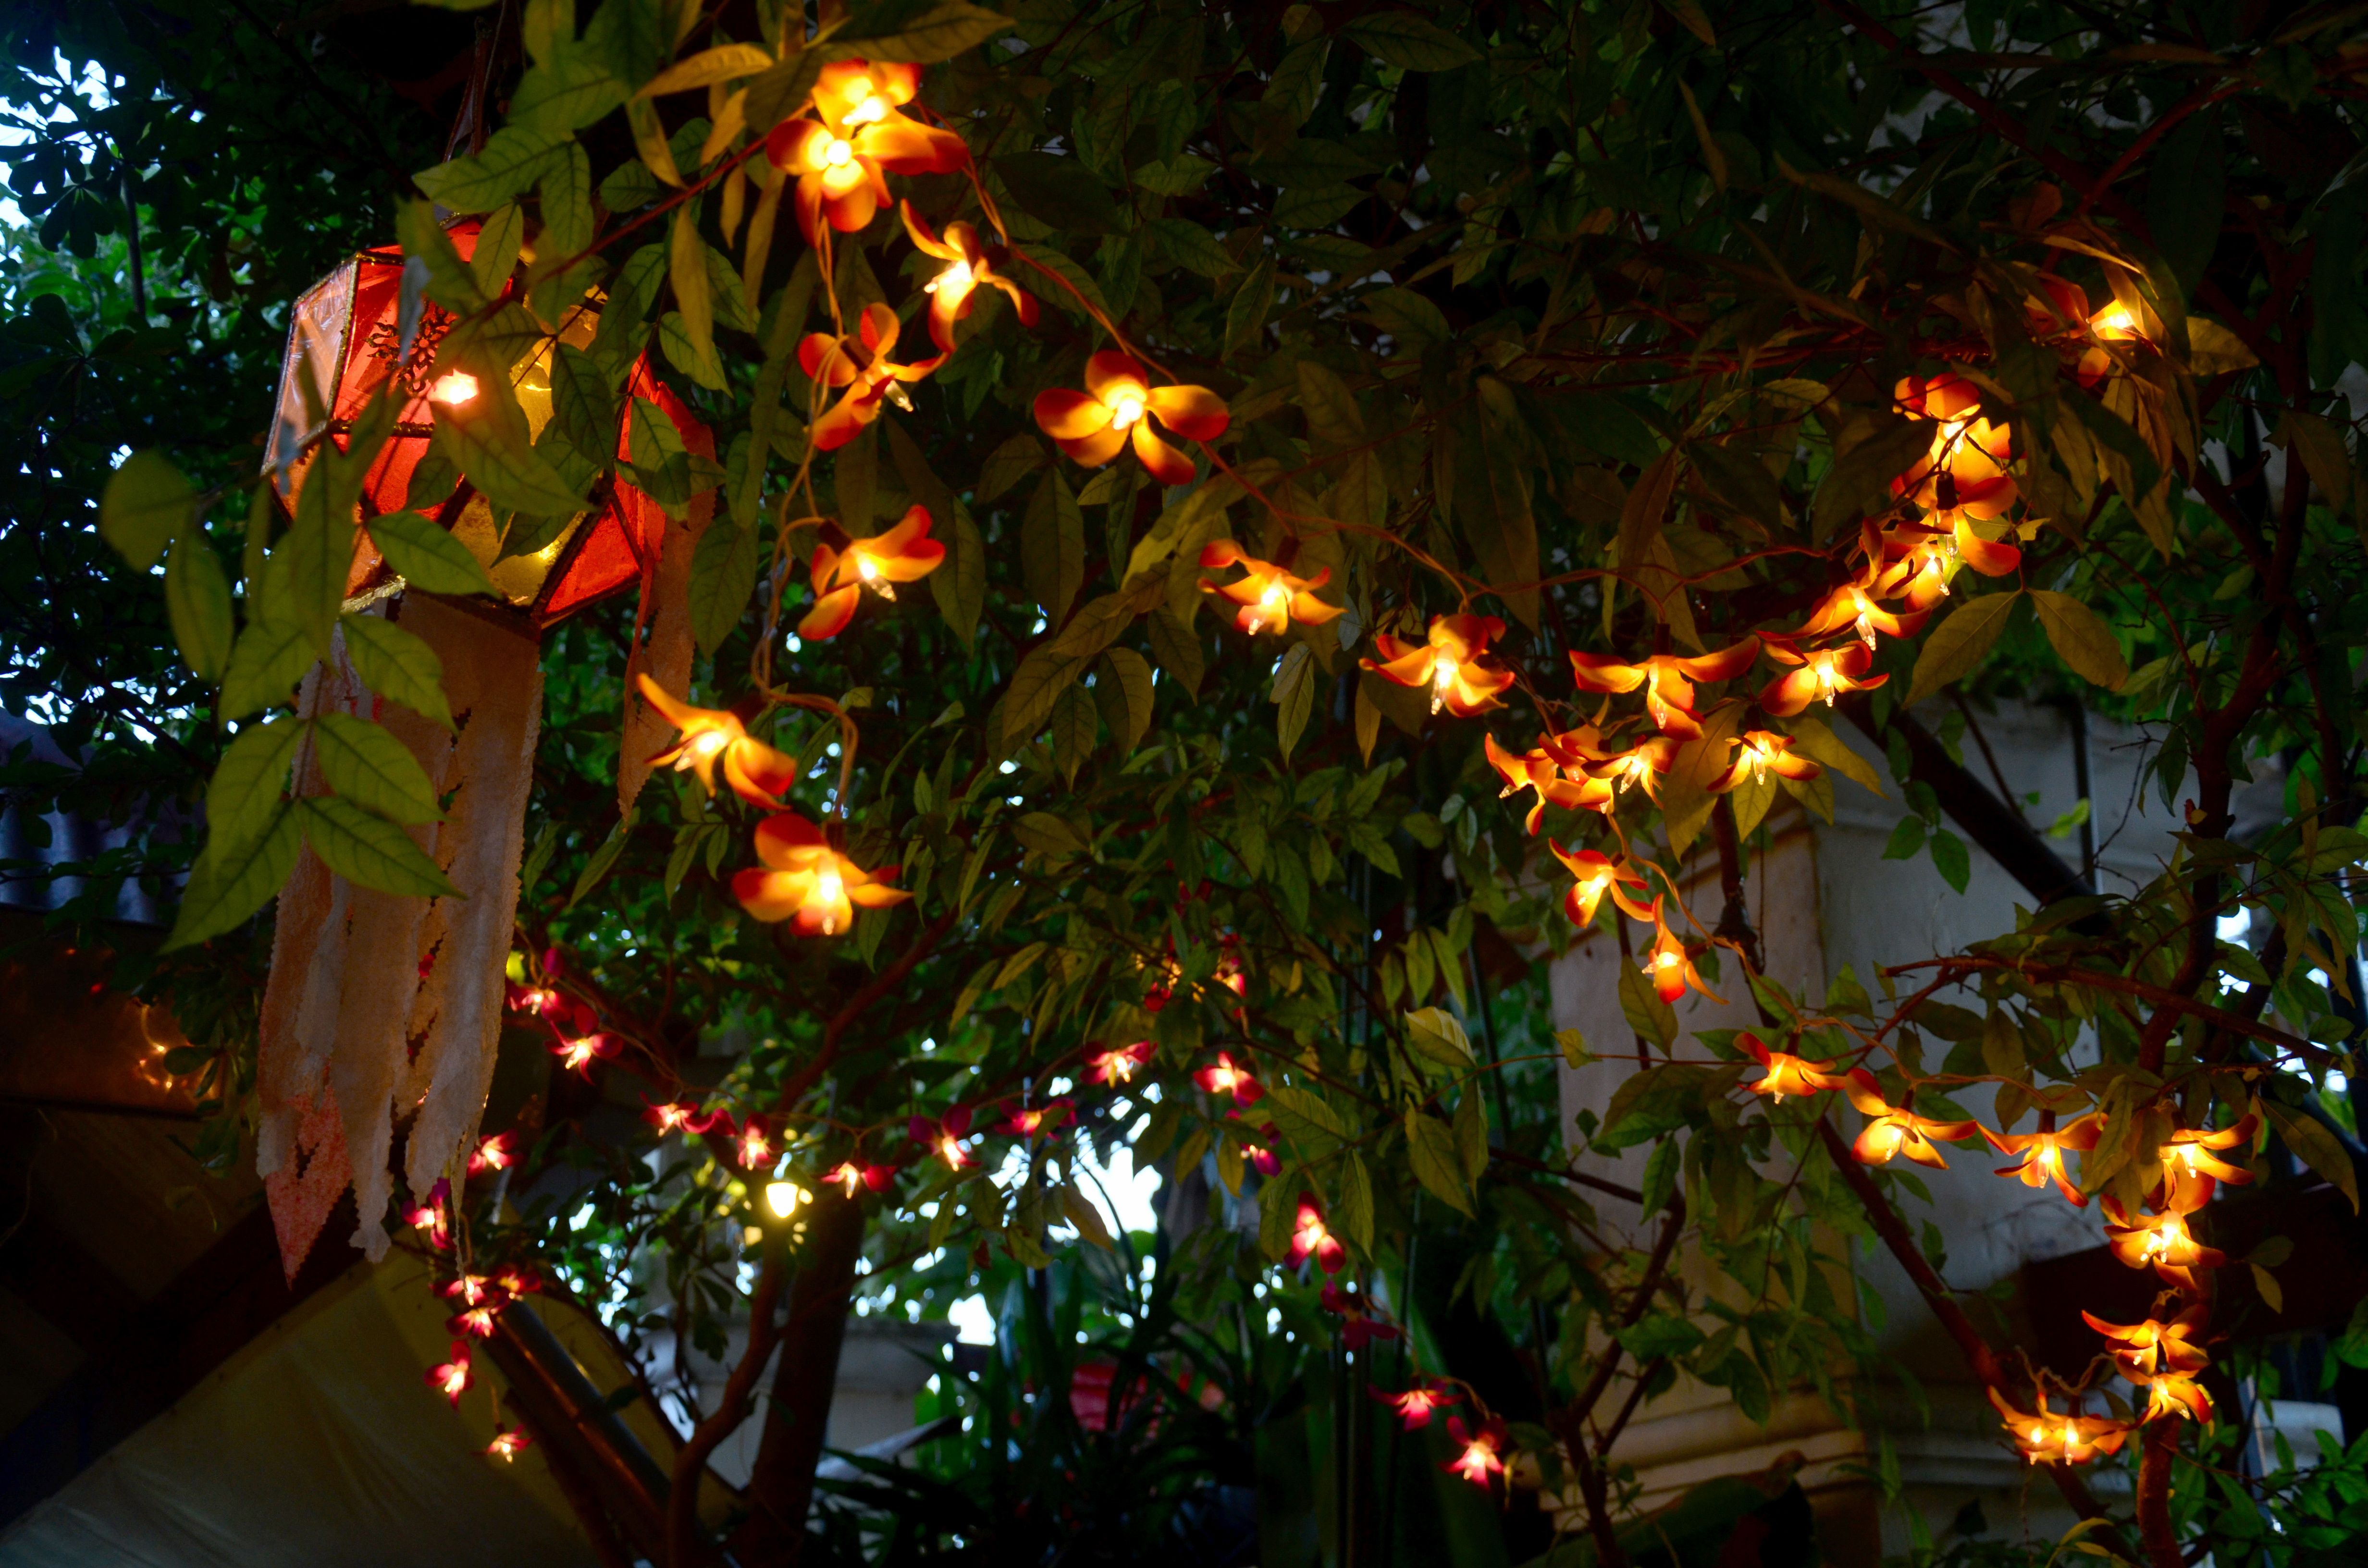 Lighting on tree in garden